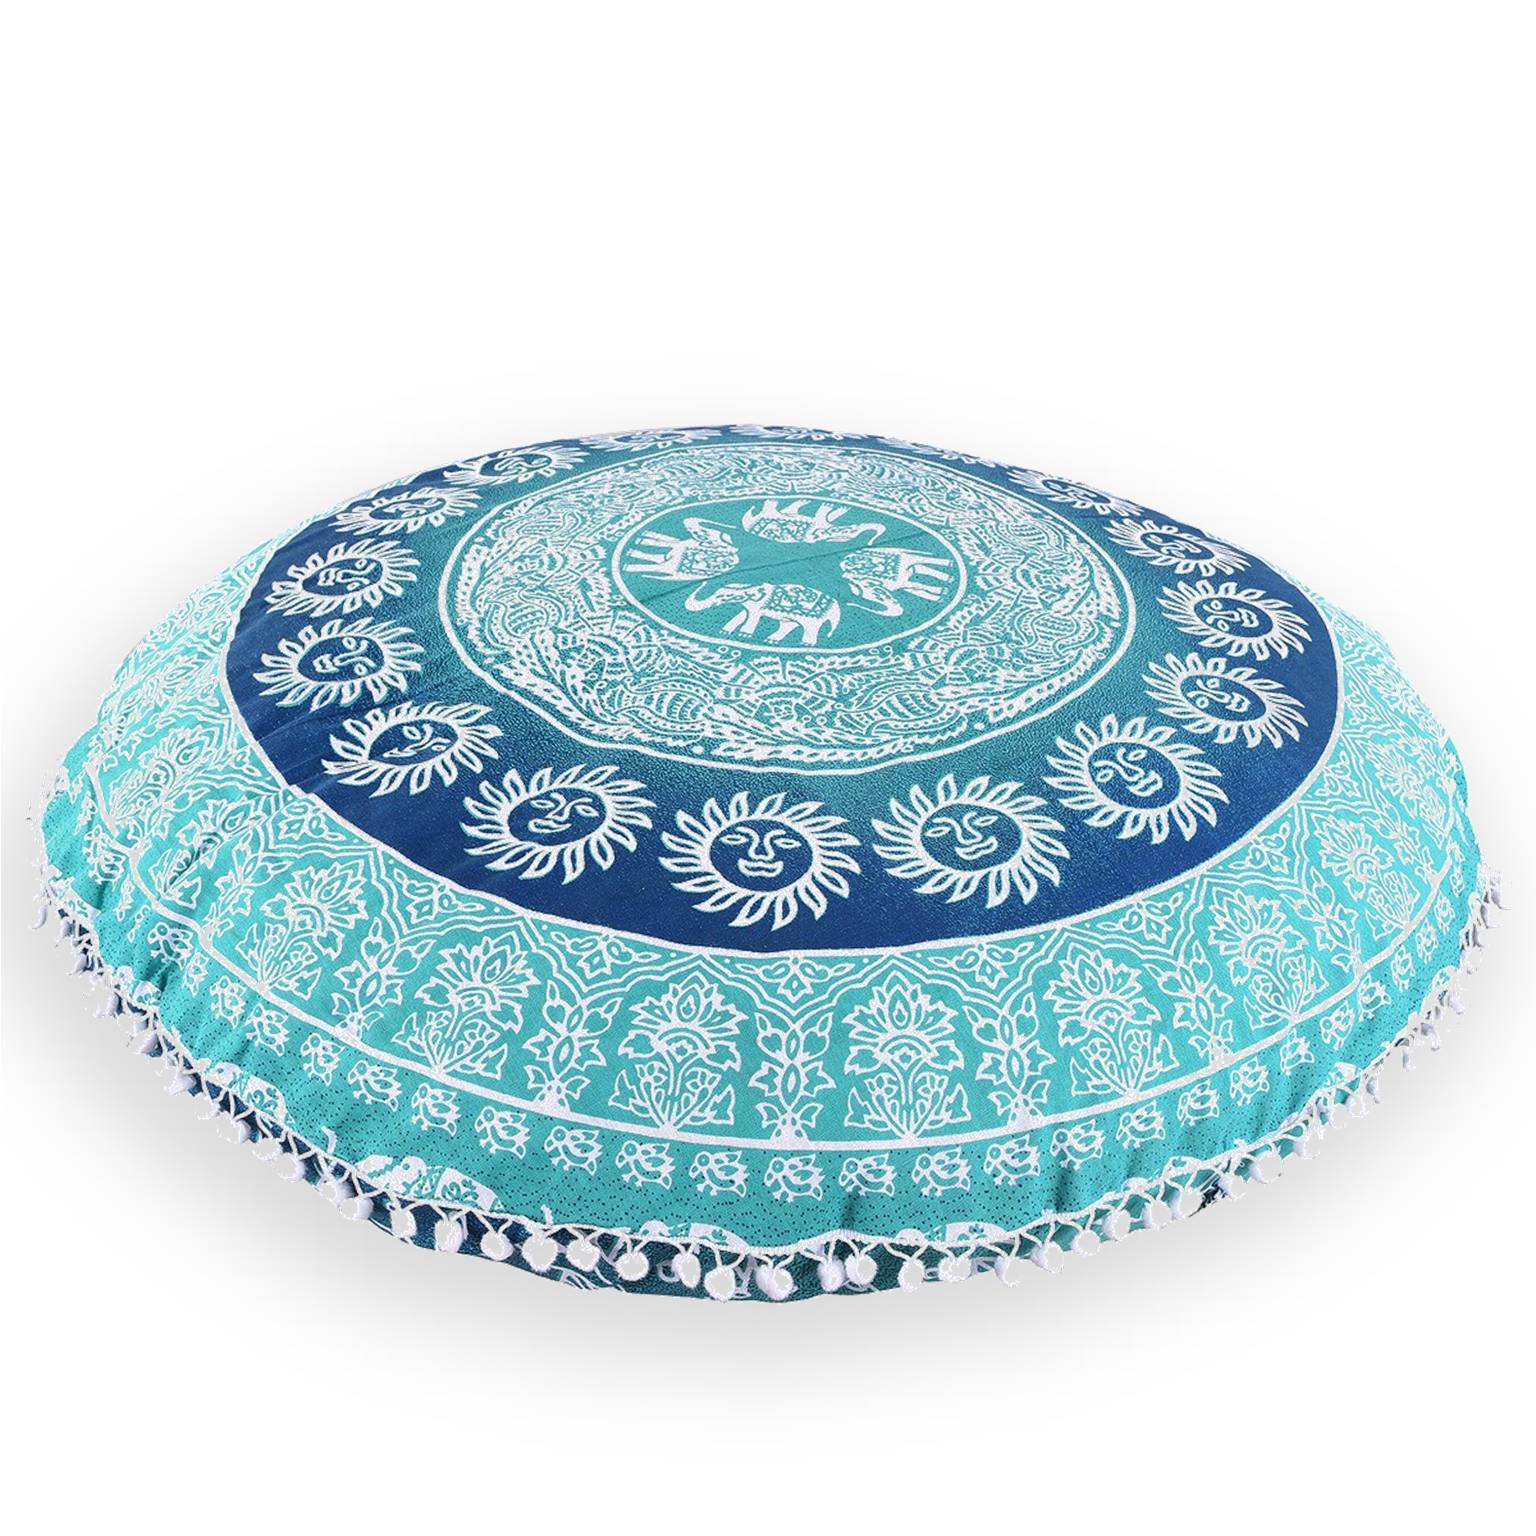 Indian Mandala Square Floor Cushion Cover Cotton Fabric Mandala Flower Design 